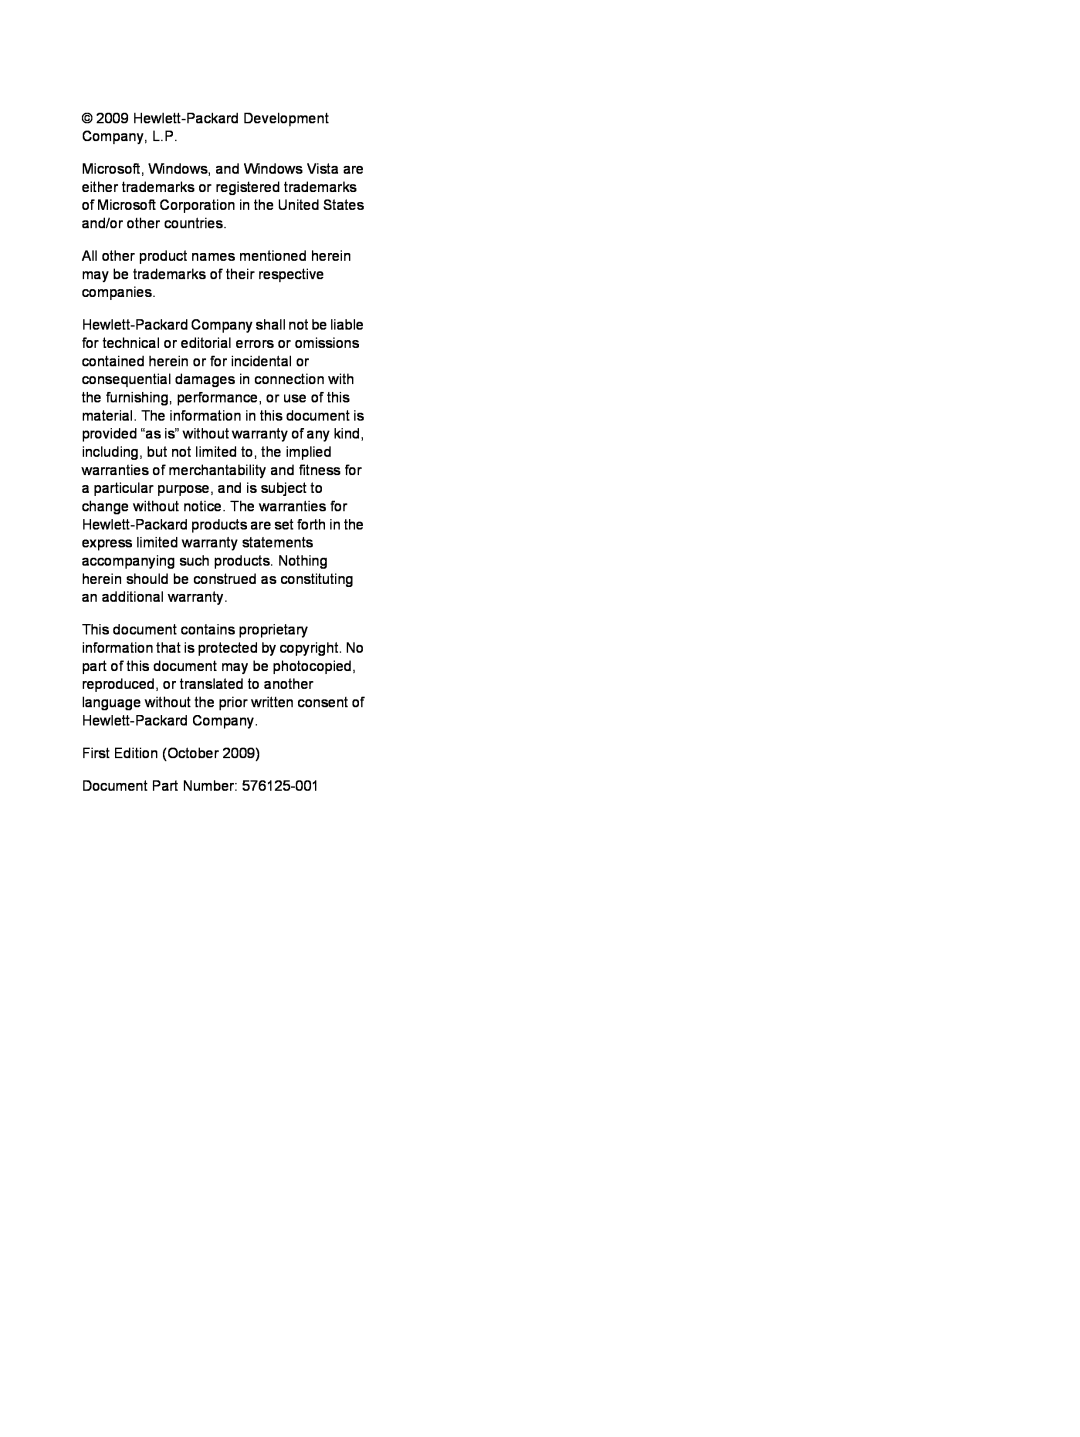 HP CQ1859E manual Hewlett-Packard Development Company, L.P, First Edition October Document Part Number 